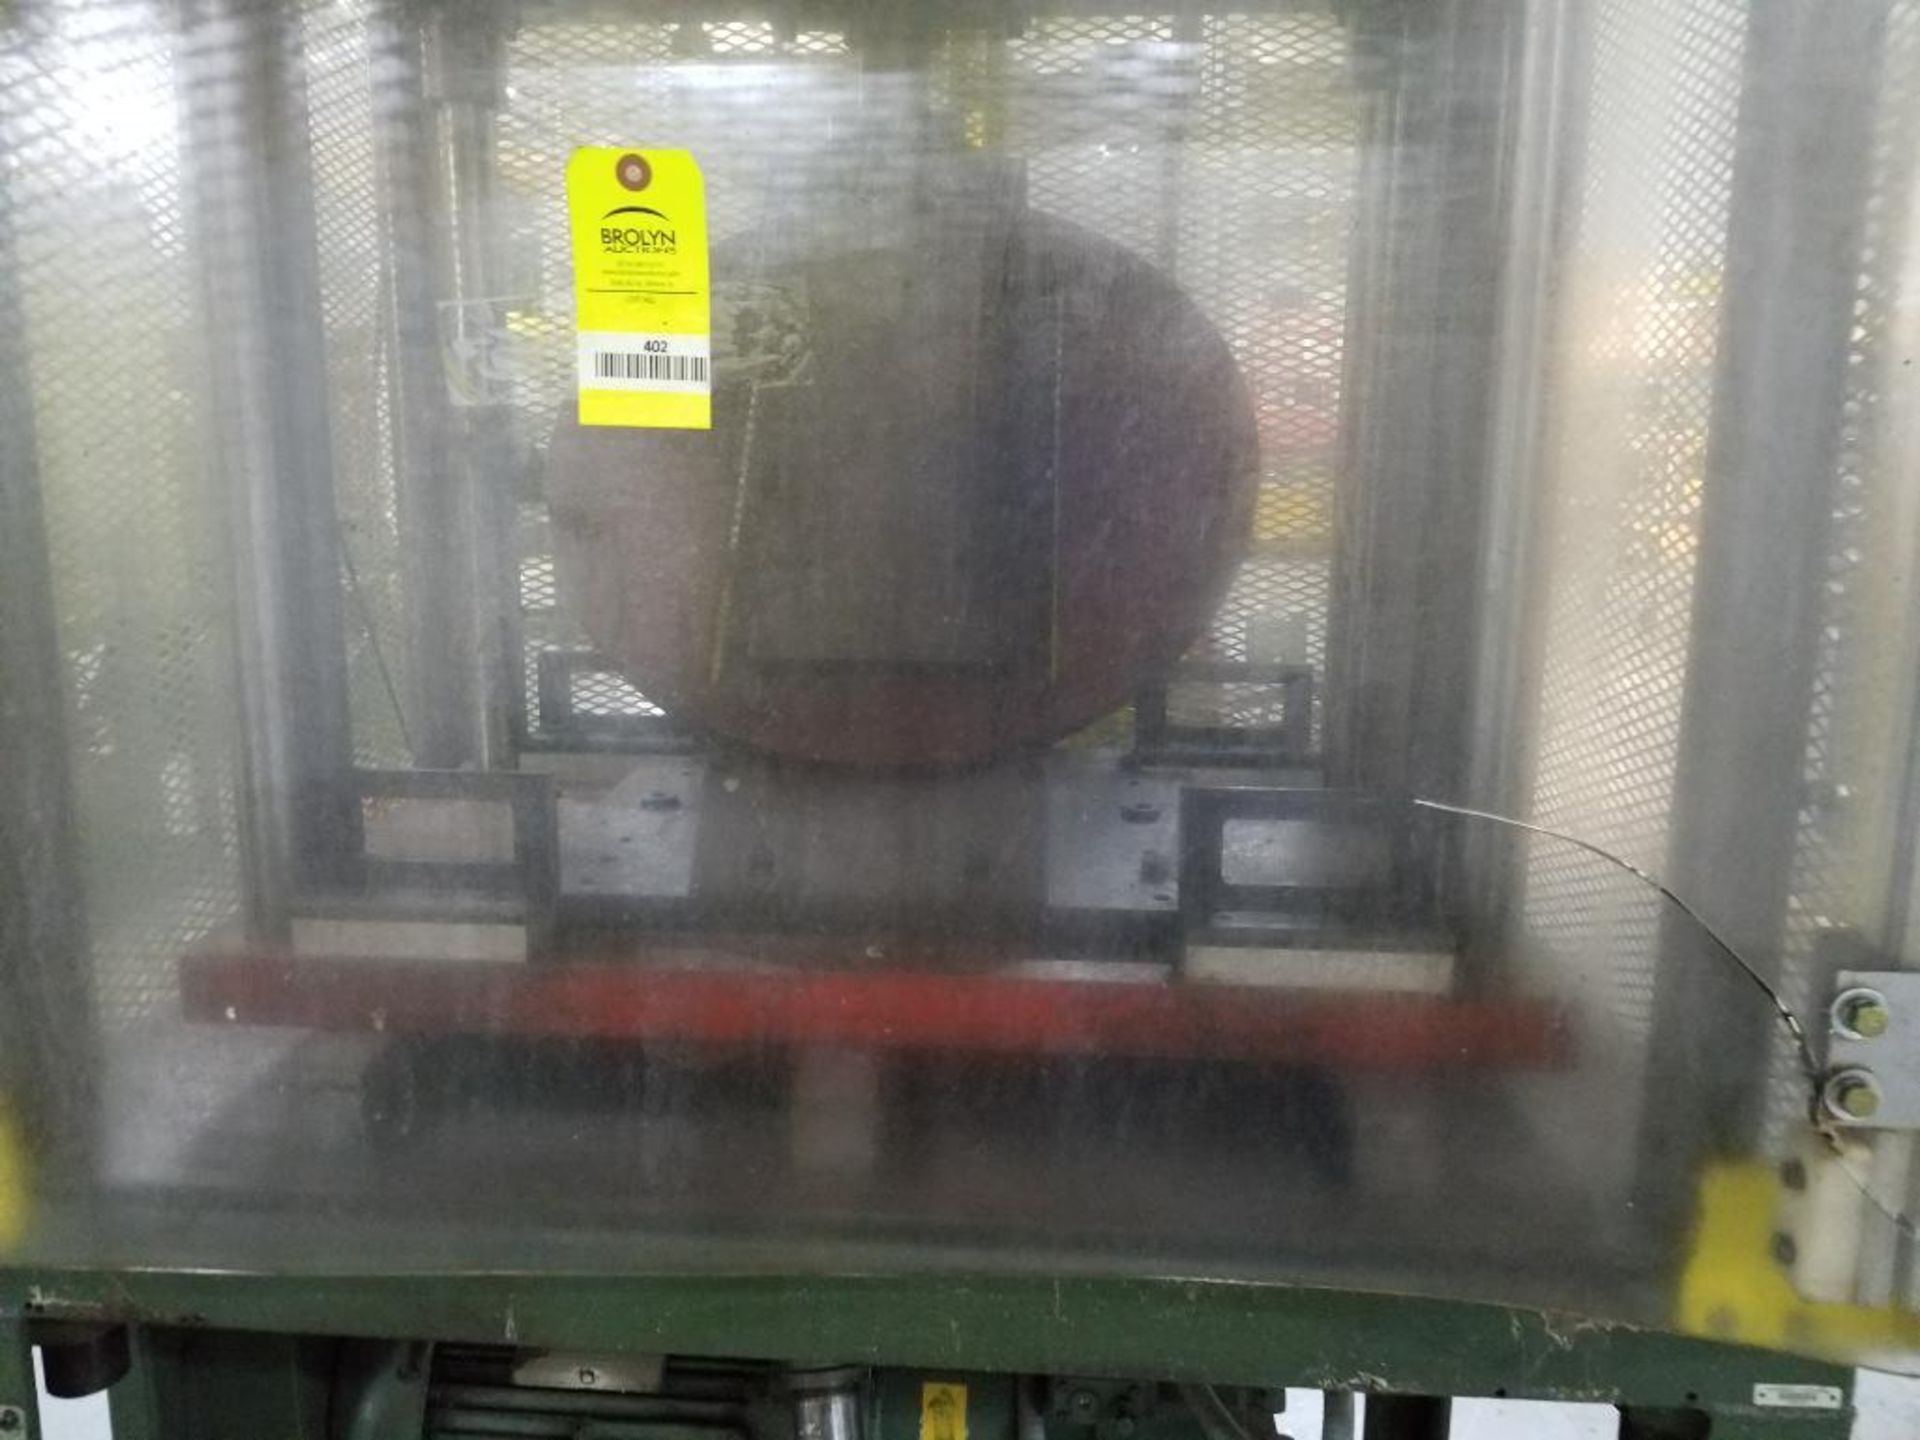 15 ton Hydraulic press. 10hp hydraulic power pack. 3 phase. Stroke 10in (est). 2in ram diameter. - Image 6 of 13